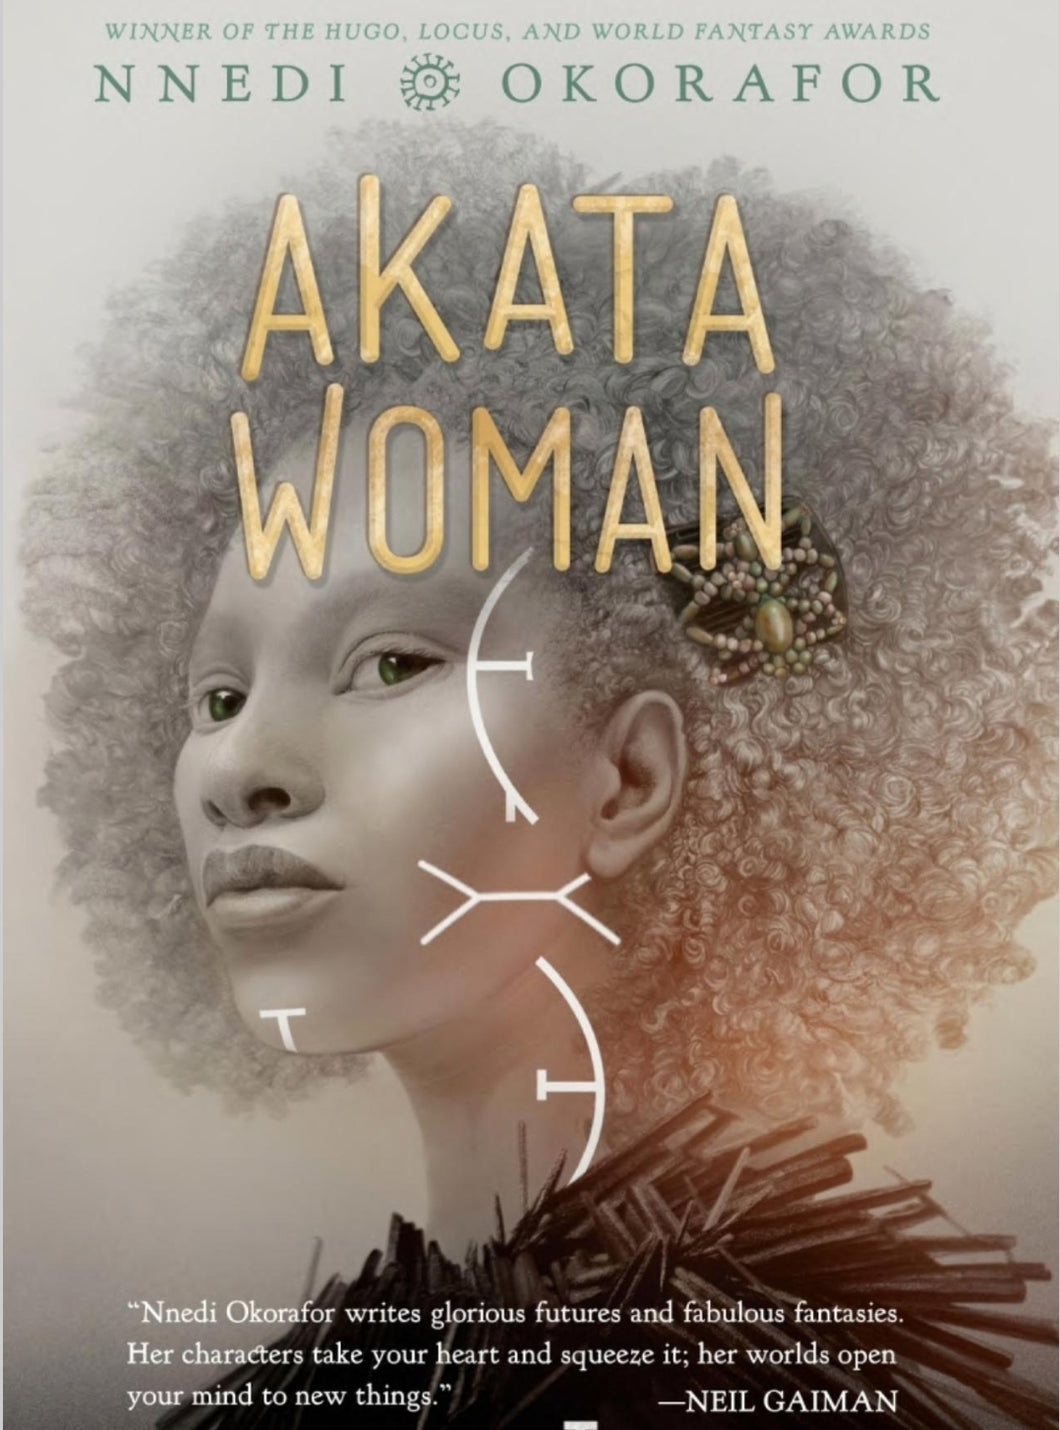 Akata Woman (The Nsibidi Scripts)